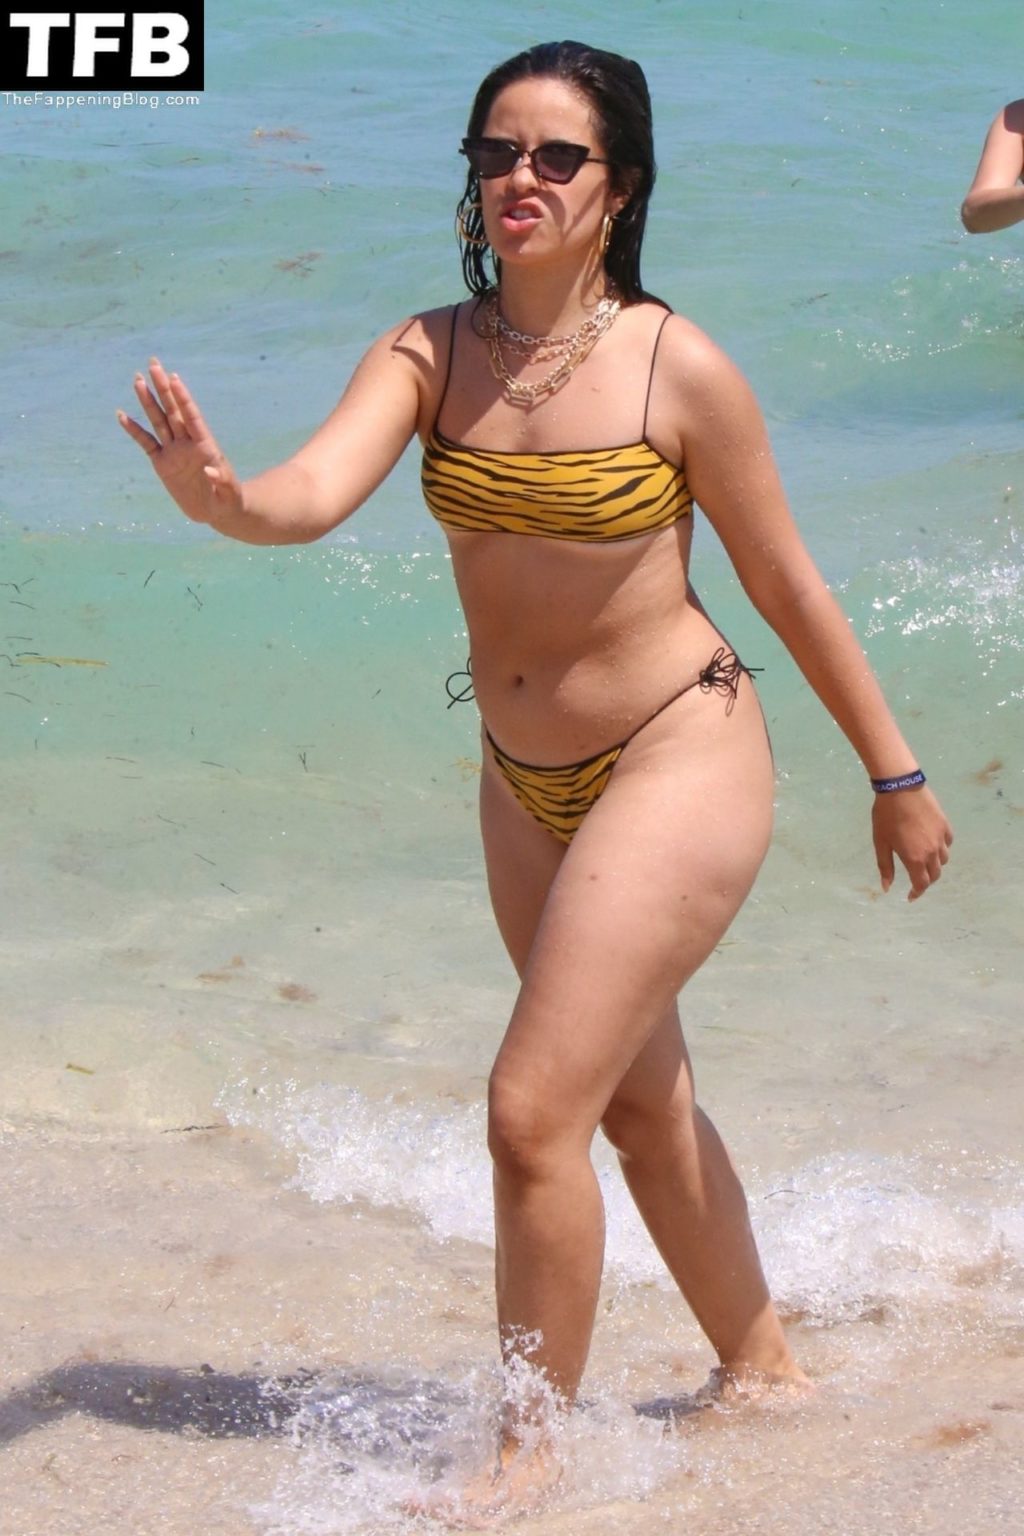 1685486785 213 Camila Cabello Sexy The Fappening Blog 22 1024x1536 - Camila Cabello Displays Her Summer-Ready Body in Miami (108 Photos)